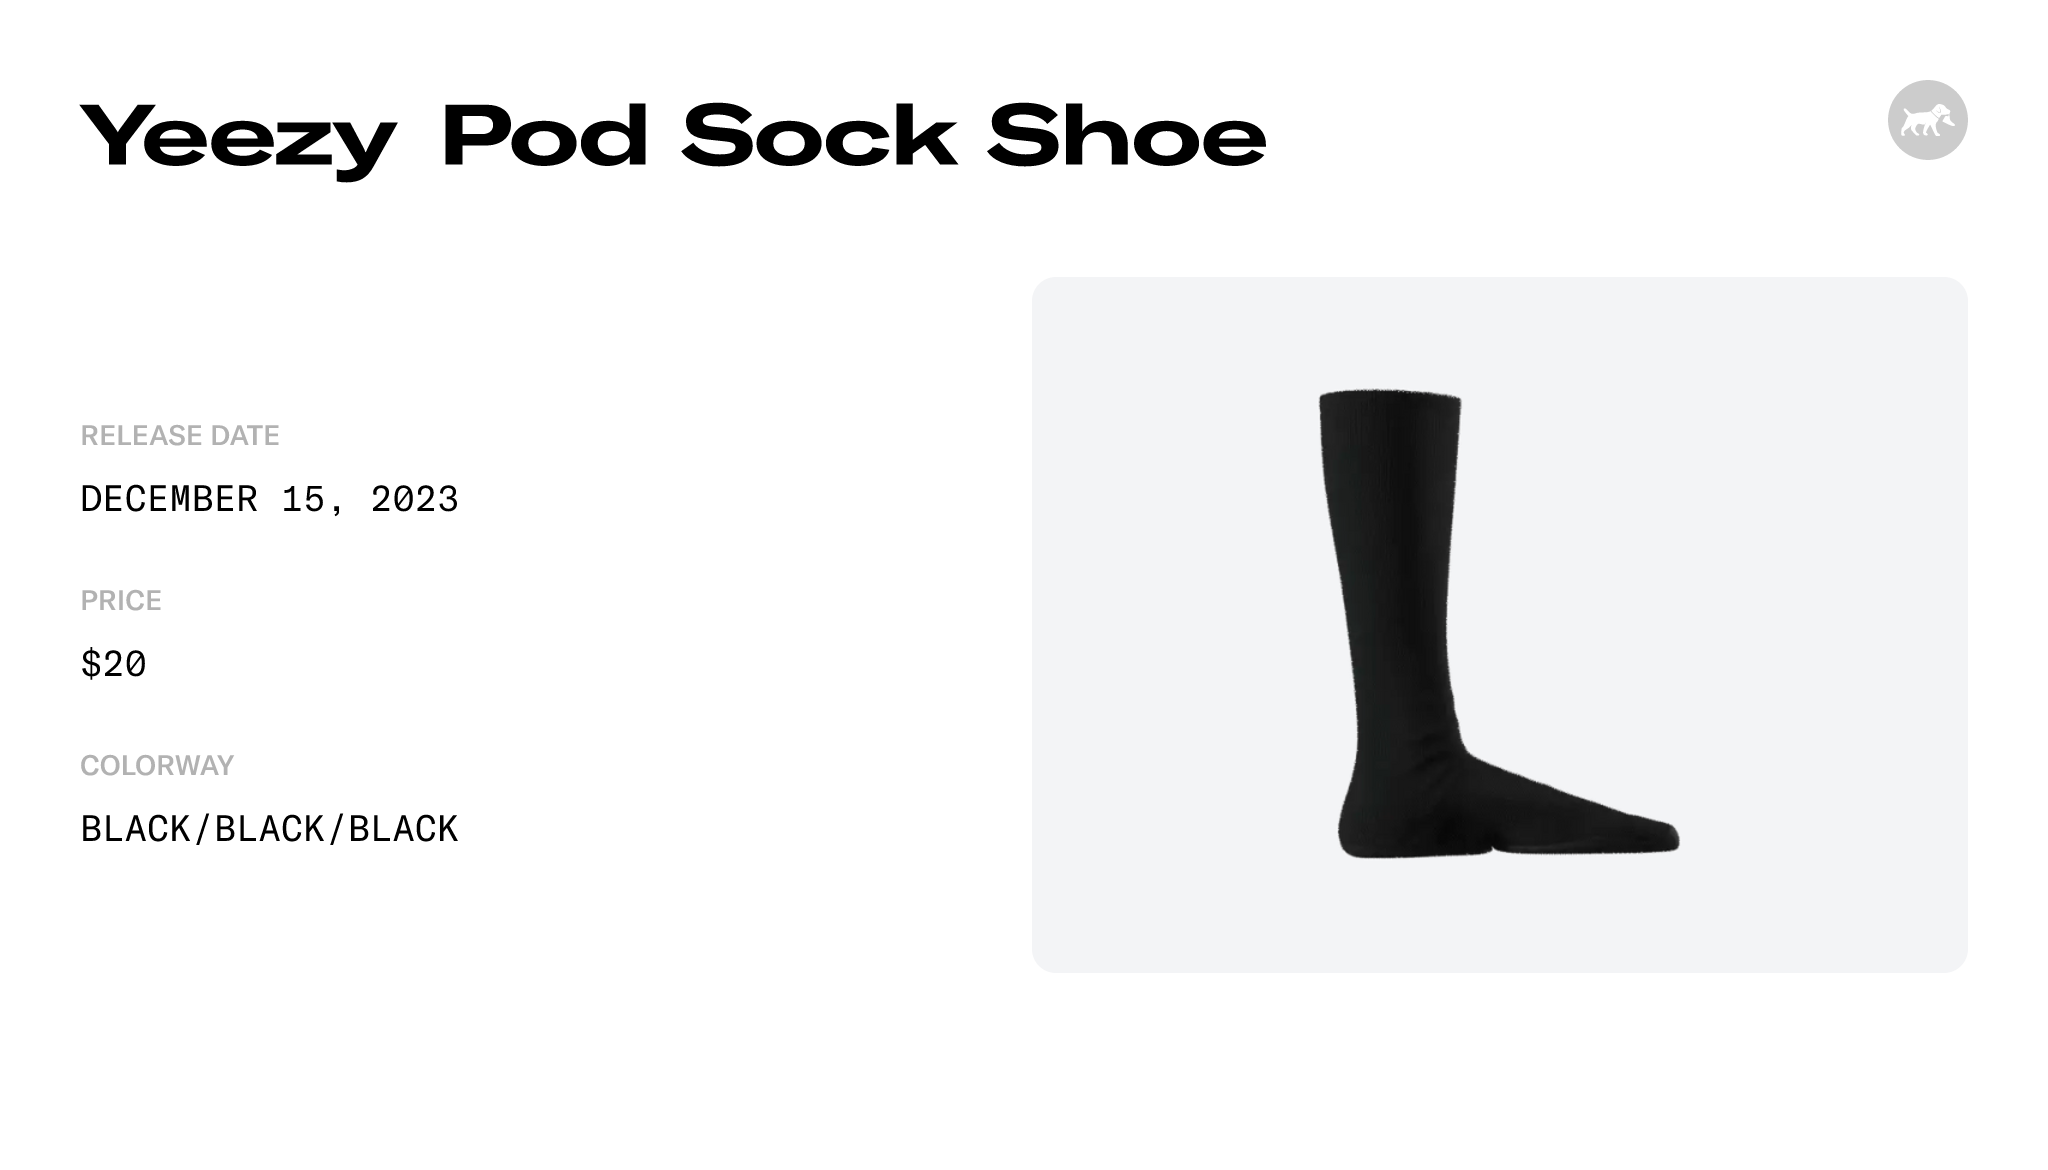 Yeezy Pod Sock Shoe - YZYPODBLK Raffles and Release Date